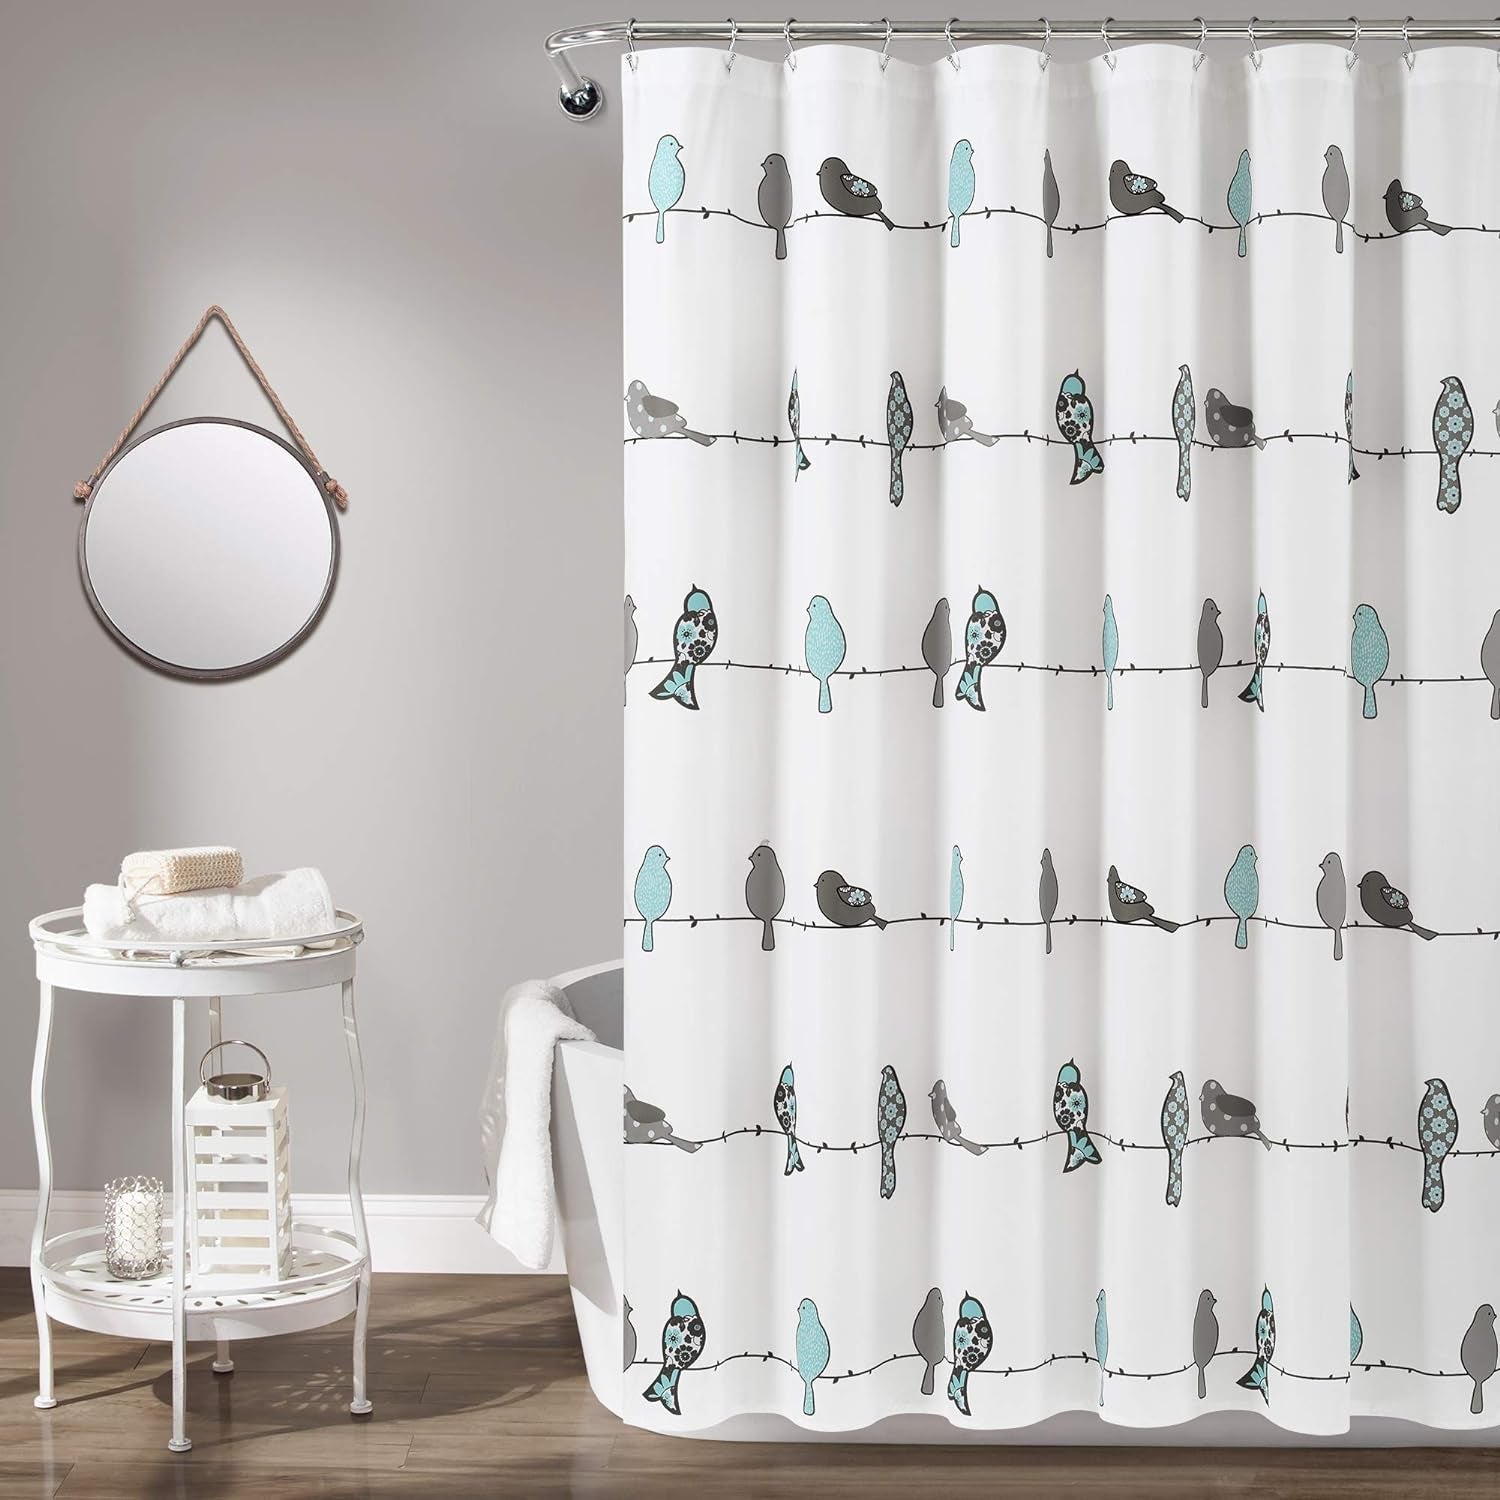 Lush Decor Rowley Birds Shower Curtain, 72” W X 72” L, Multi - Colorful Floral Bird Pattern - Whimsical & Playful Bird Shower Curtain - Farmhouse, Coastal, & Boho Bathroom Decor